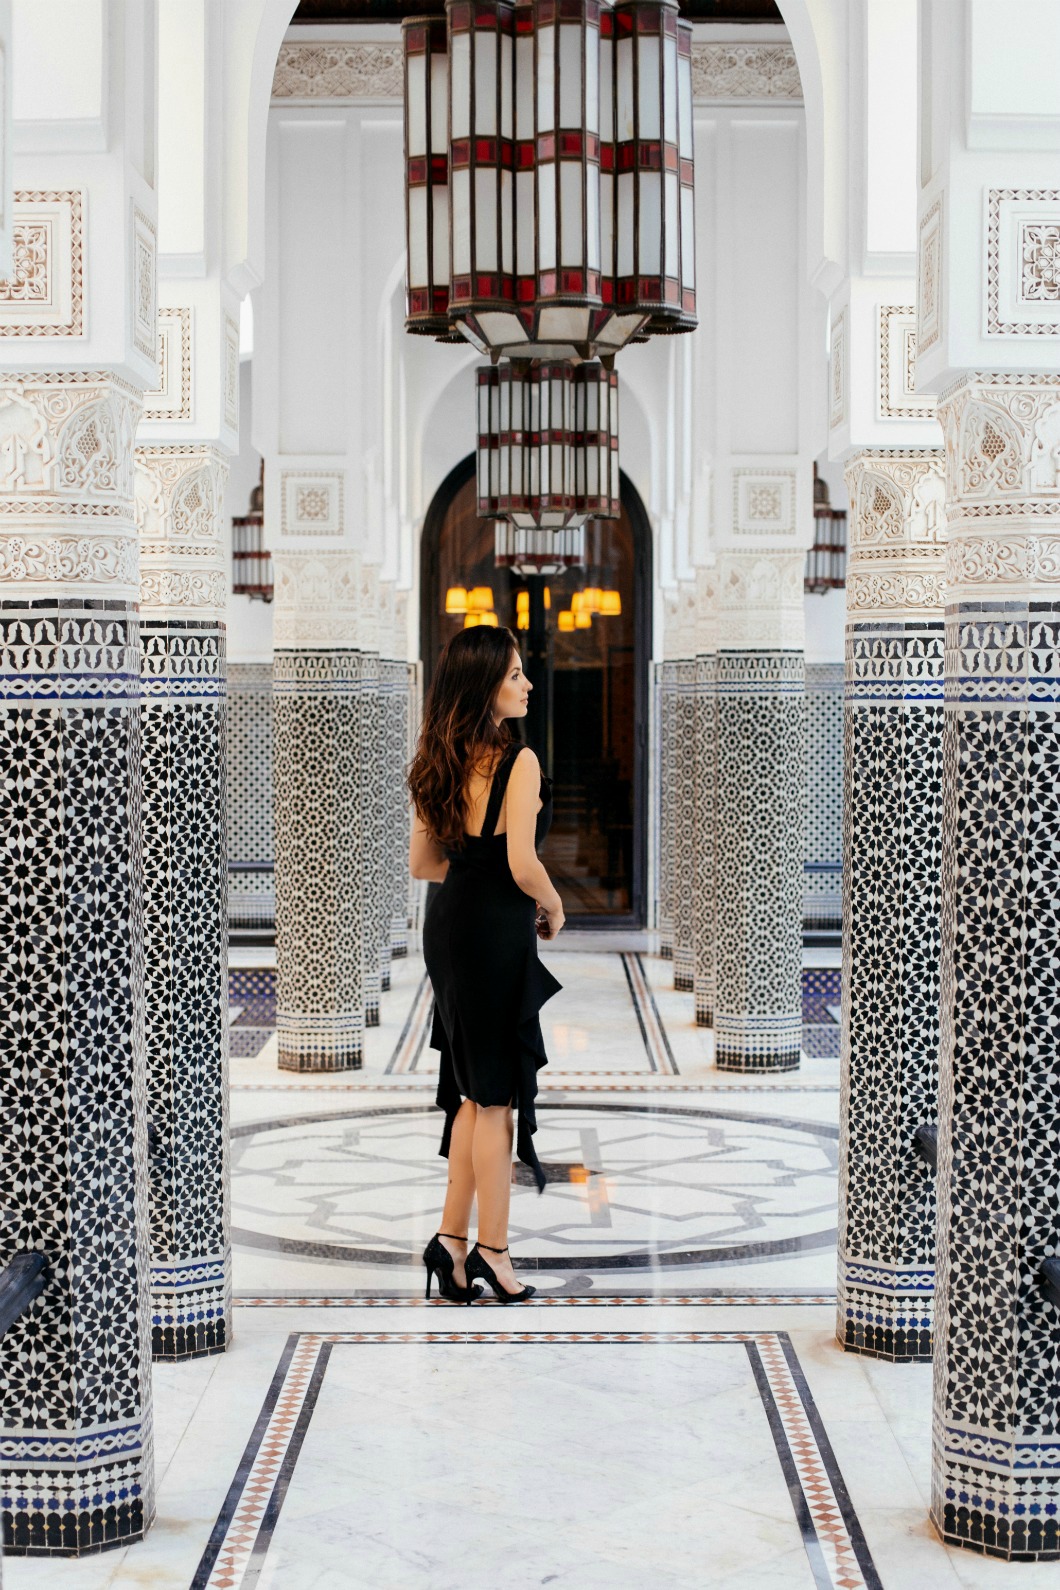 palace-in-marrakesh-morocco-la-mamounia-5-star-luxury-hotel-spa-12